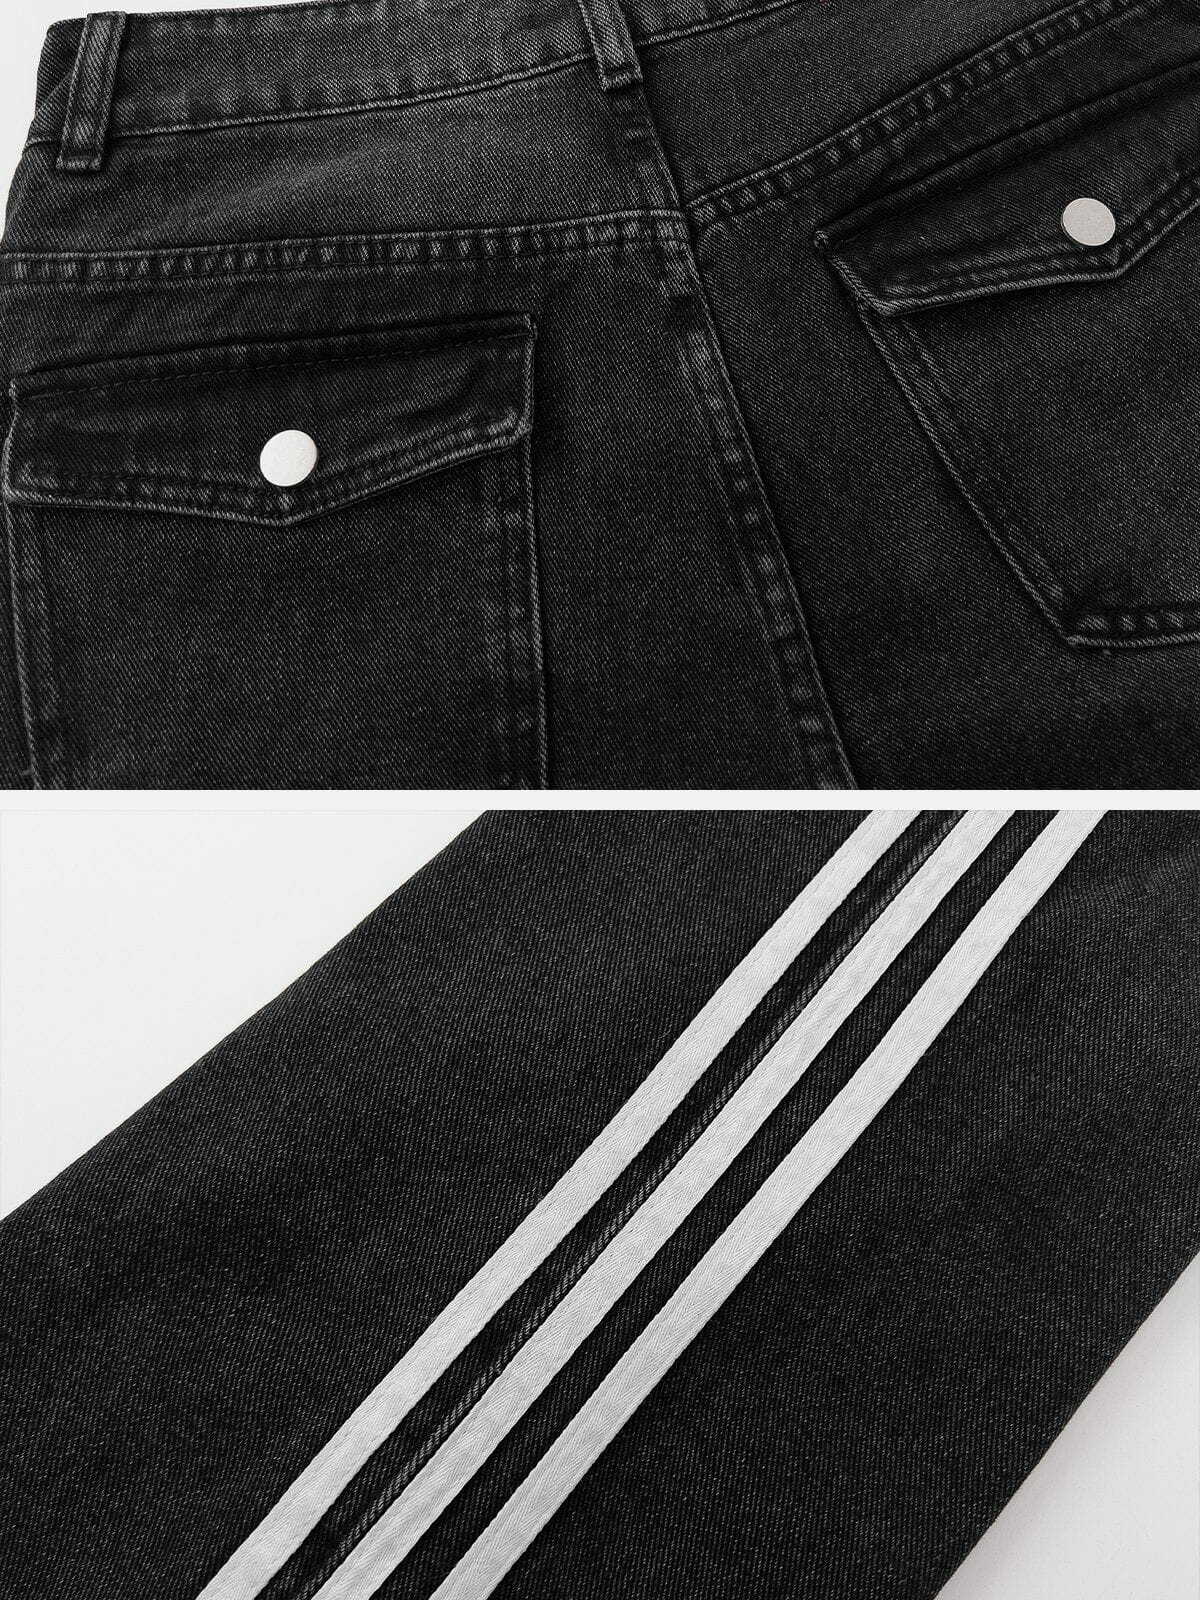 waterwash side stripes jeans edgy urban denim 8482